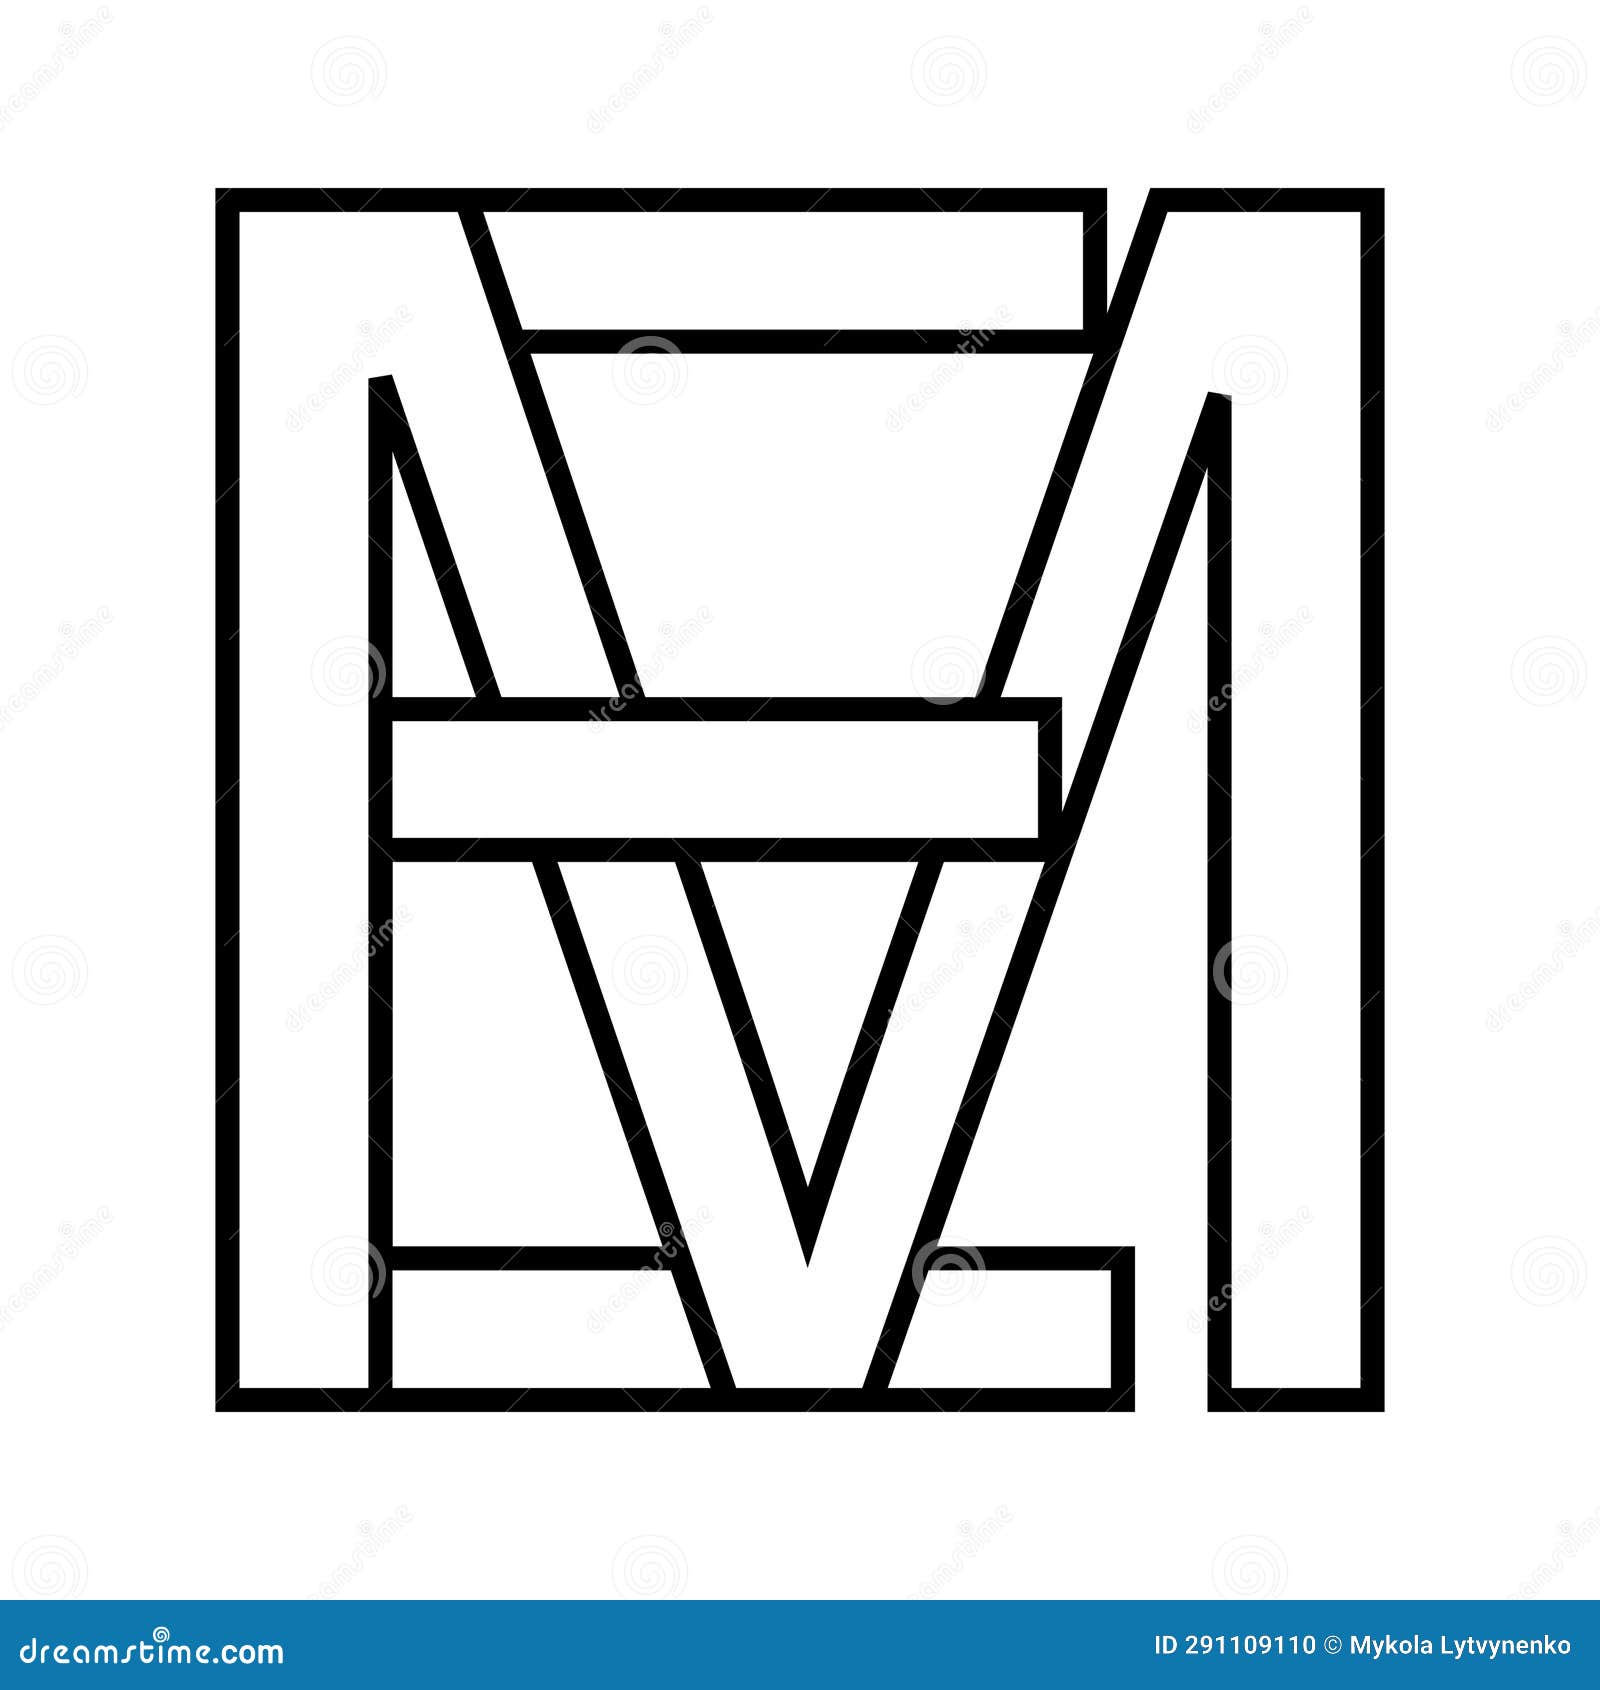 logo sign me em icon double letters, logotype m e